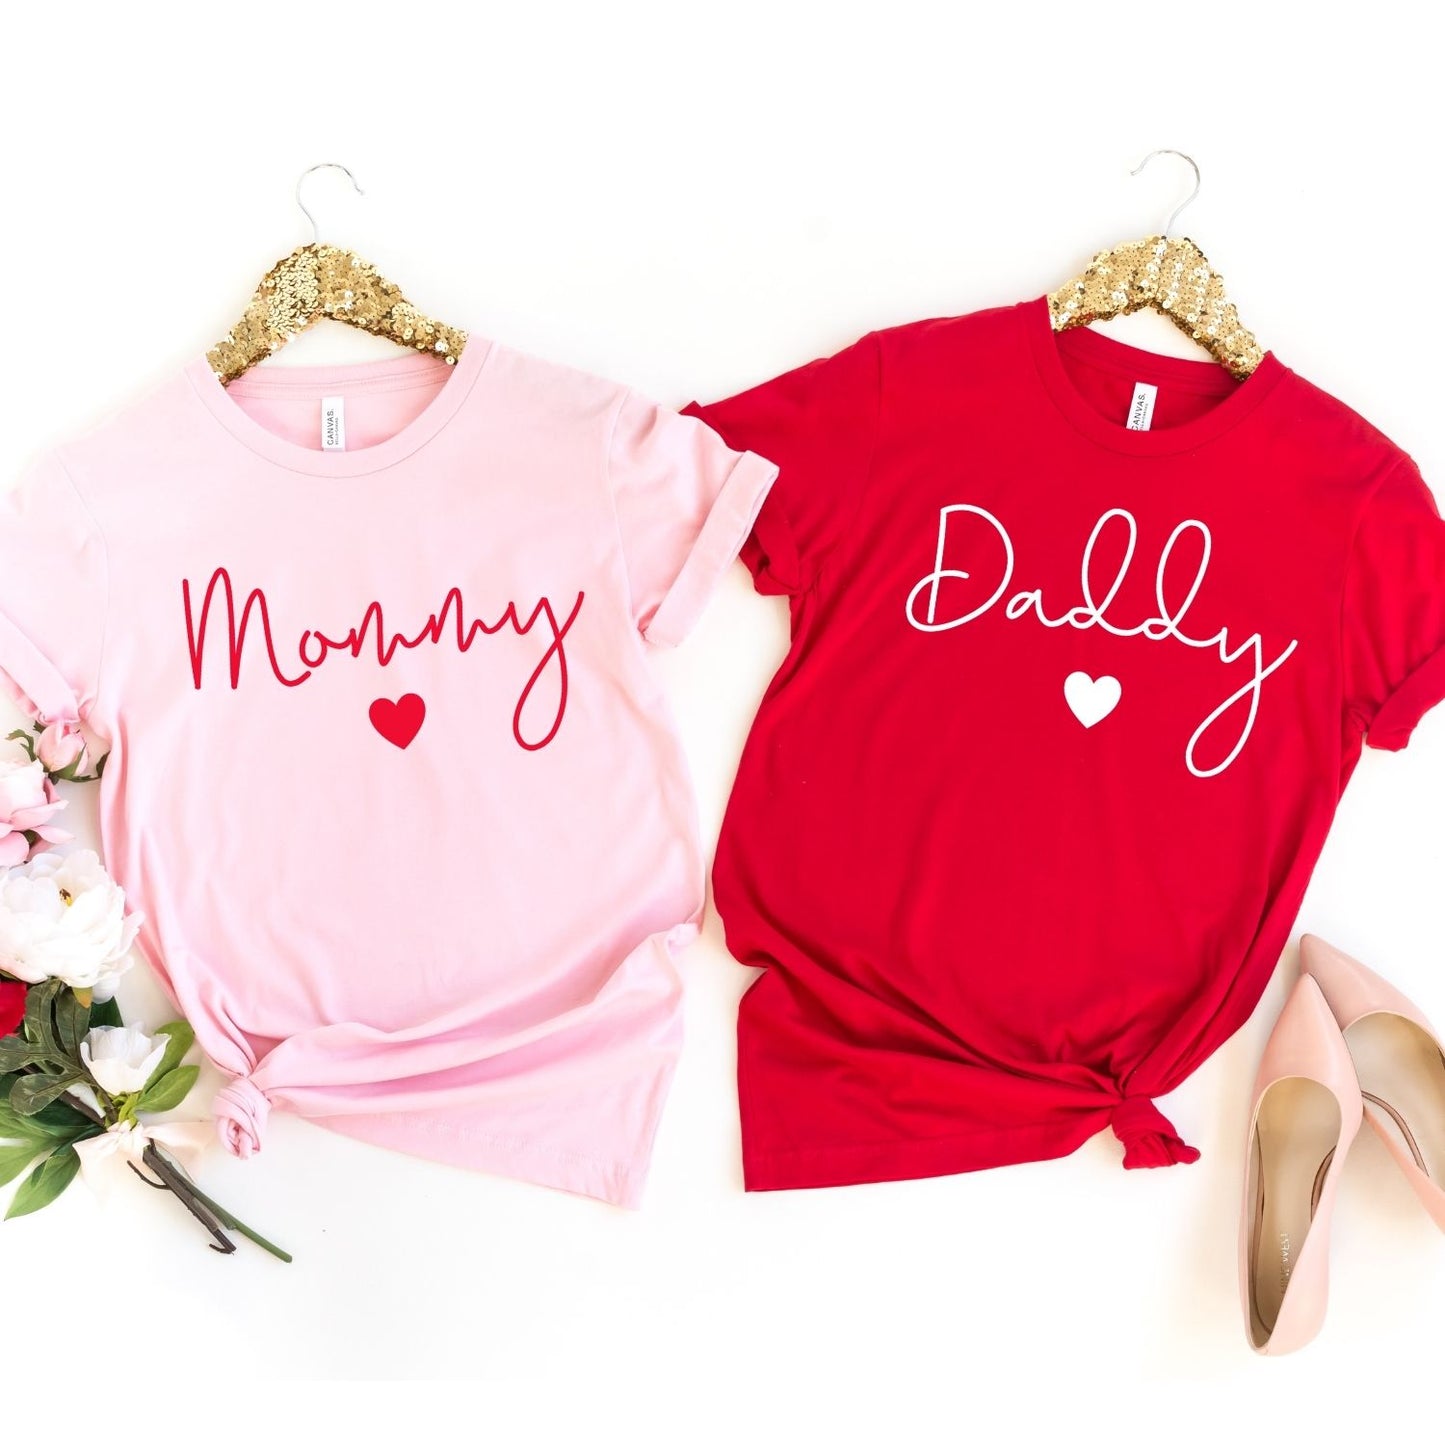 Mommy Daddy Valentine's Day Shirts